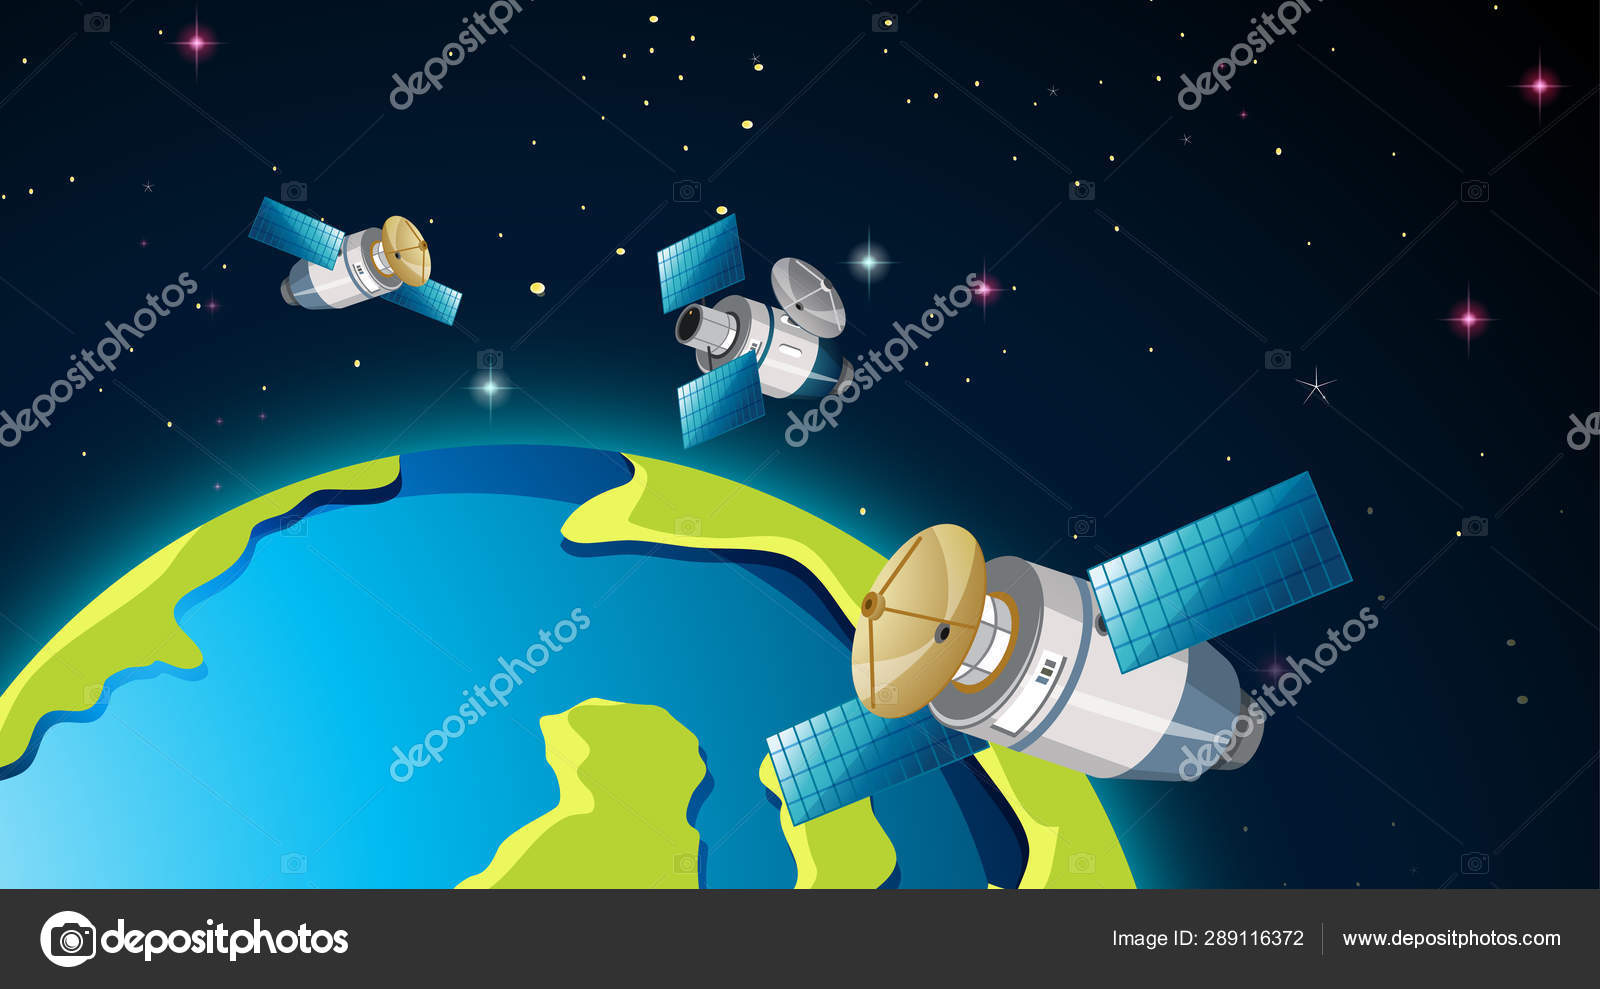 Satellites around the earth Vector Art Stock Images | Depositphotos